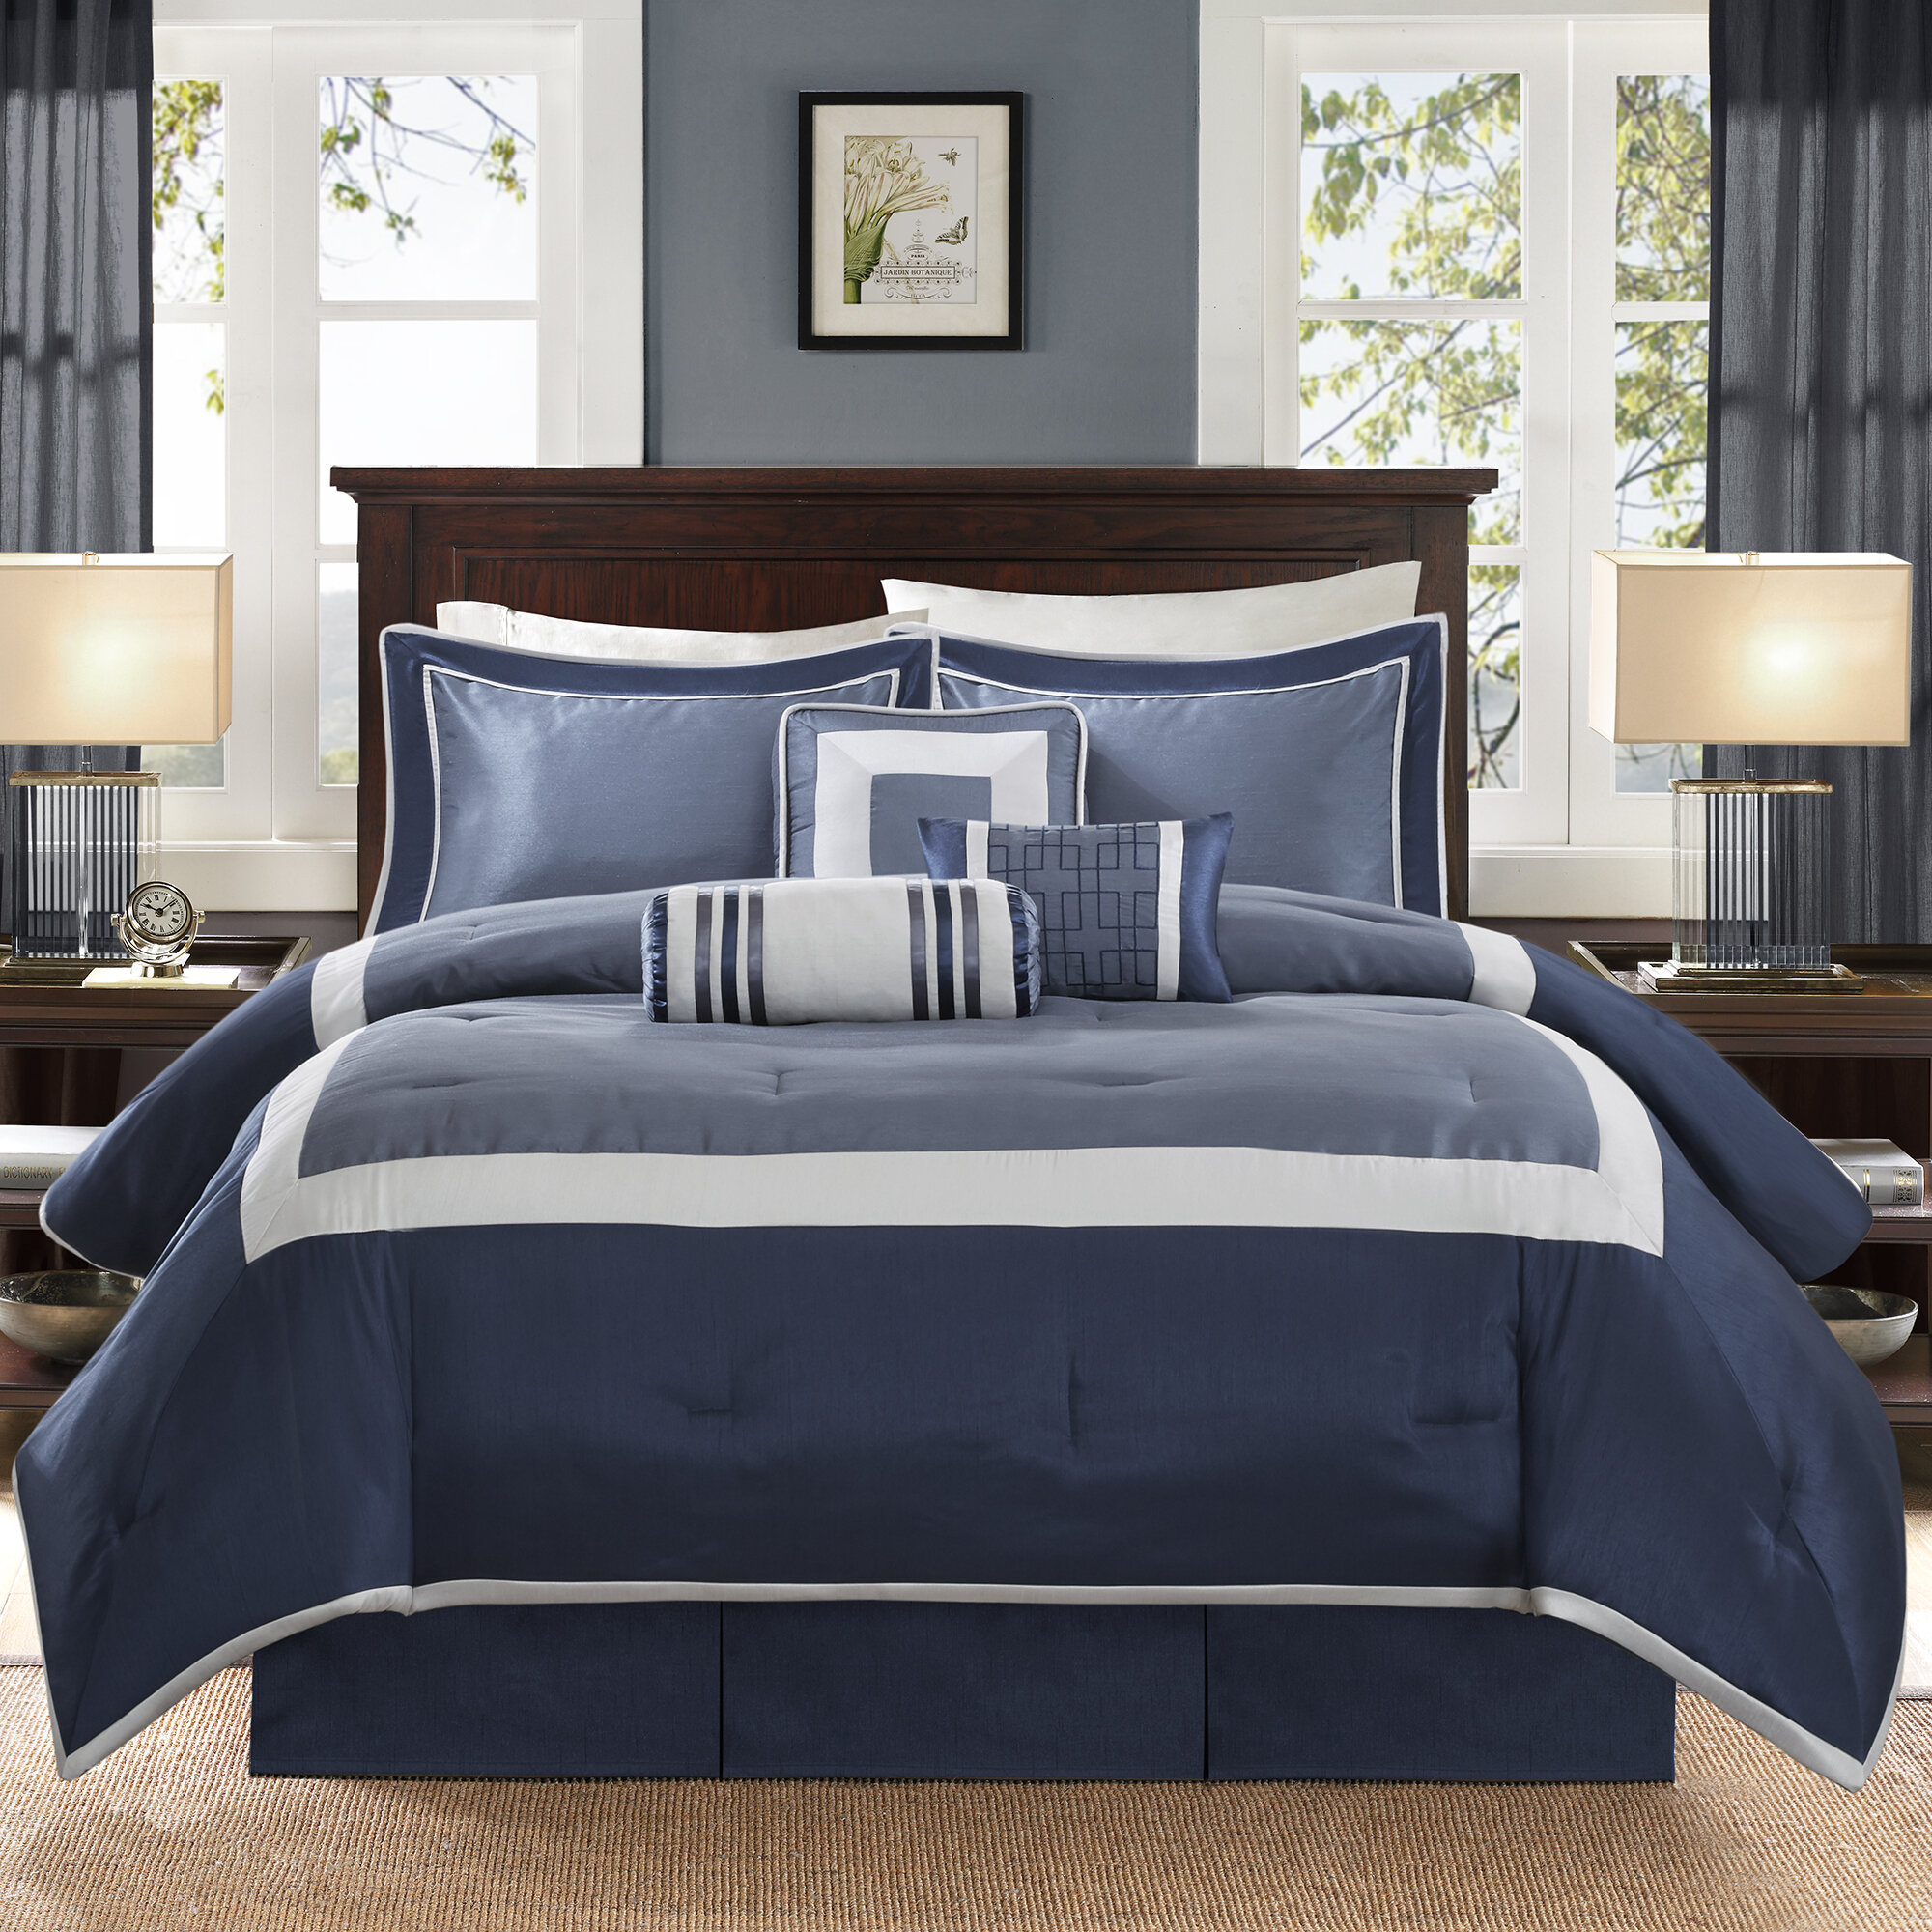 New 7 PIECE Blue REVERSIBLE Gray Full Size Comforter Set Sheets Bedding Bedsprea 